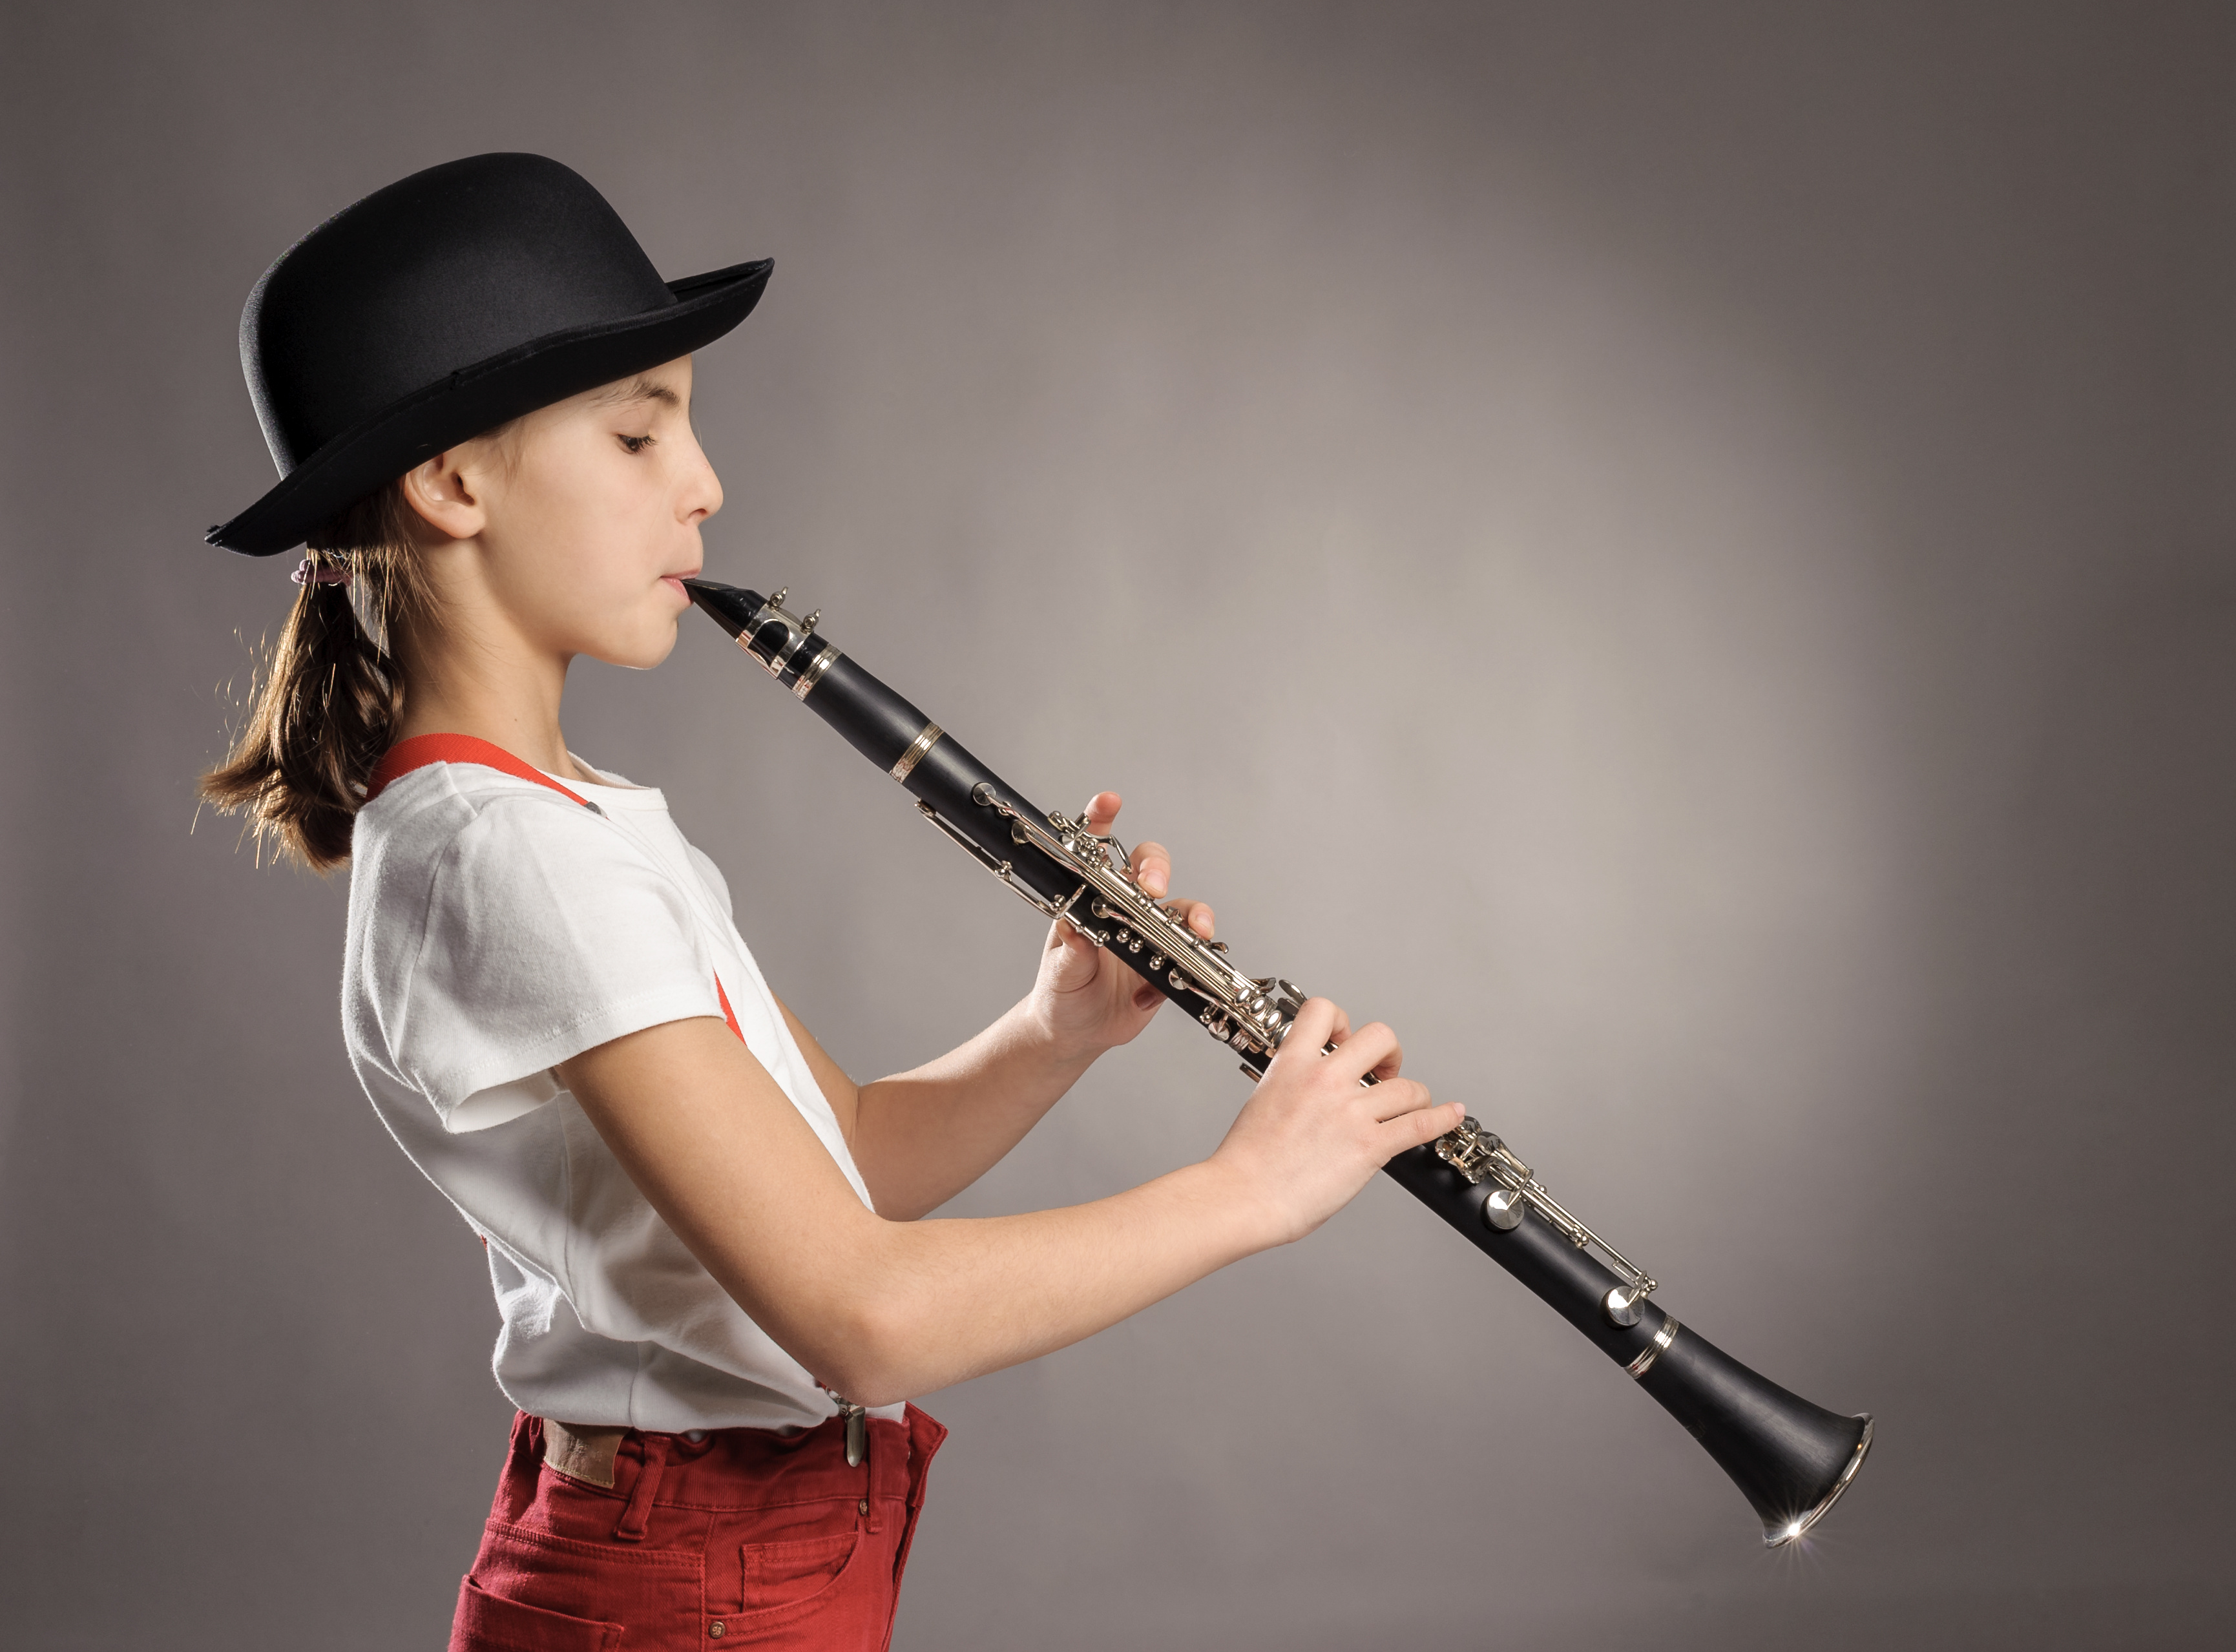 Clarinet Lessons Folsom | Clarinet Classes Folsom, CA - Mr. D's Music School